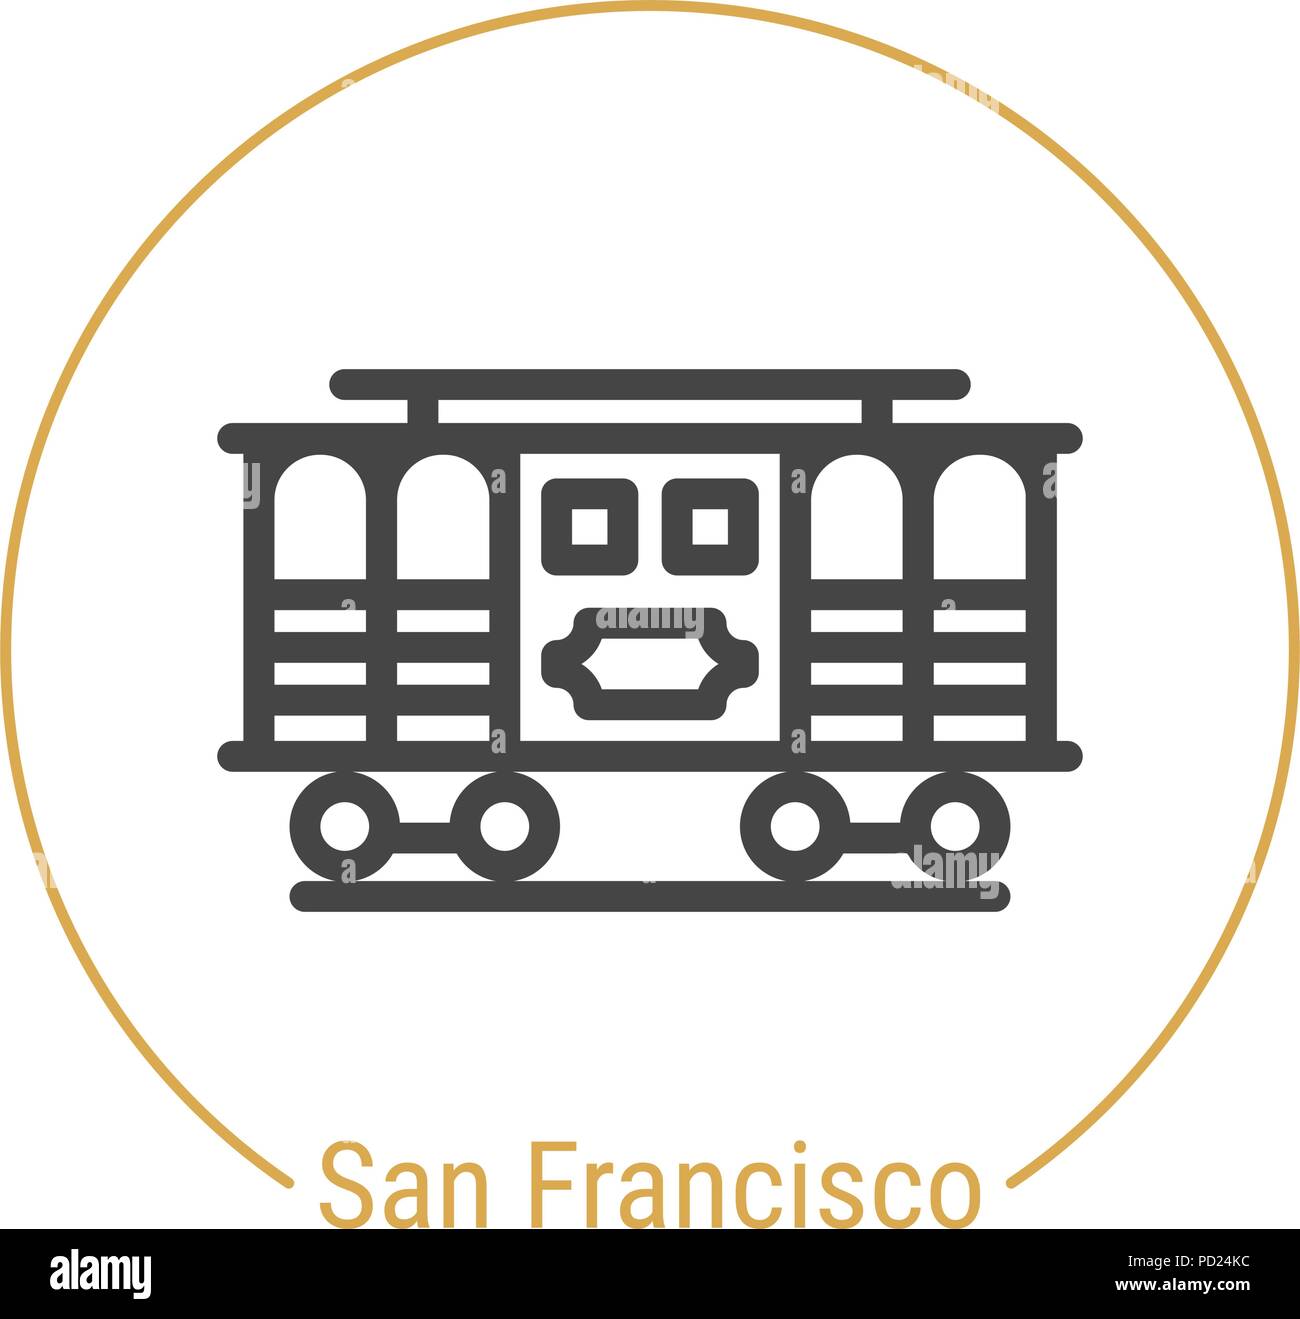 San Francisco, United States Vector Line Icon Stock Vector